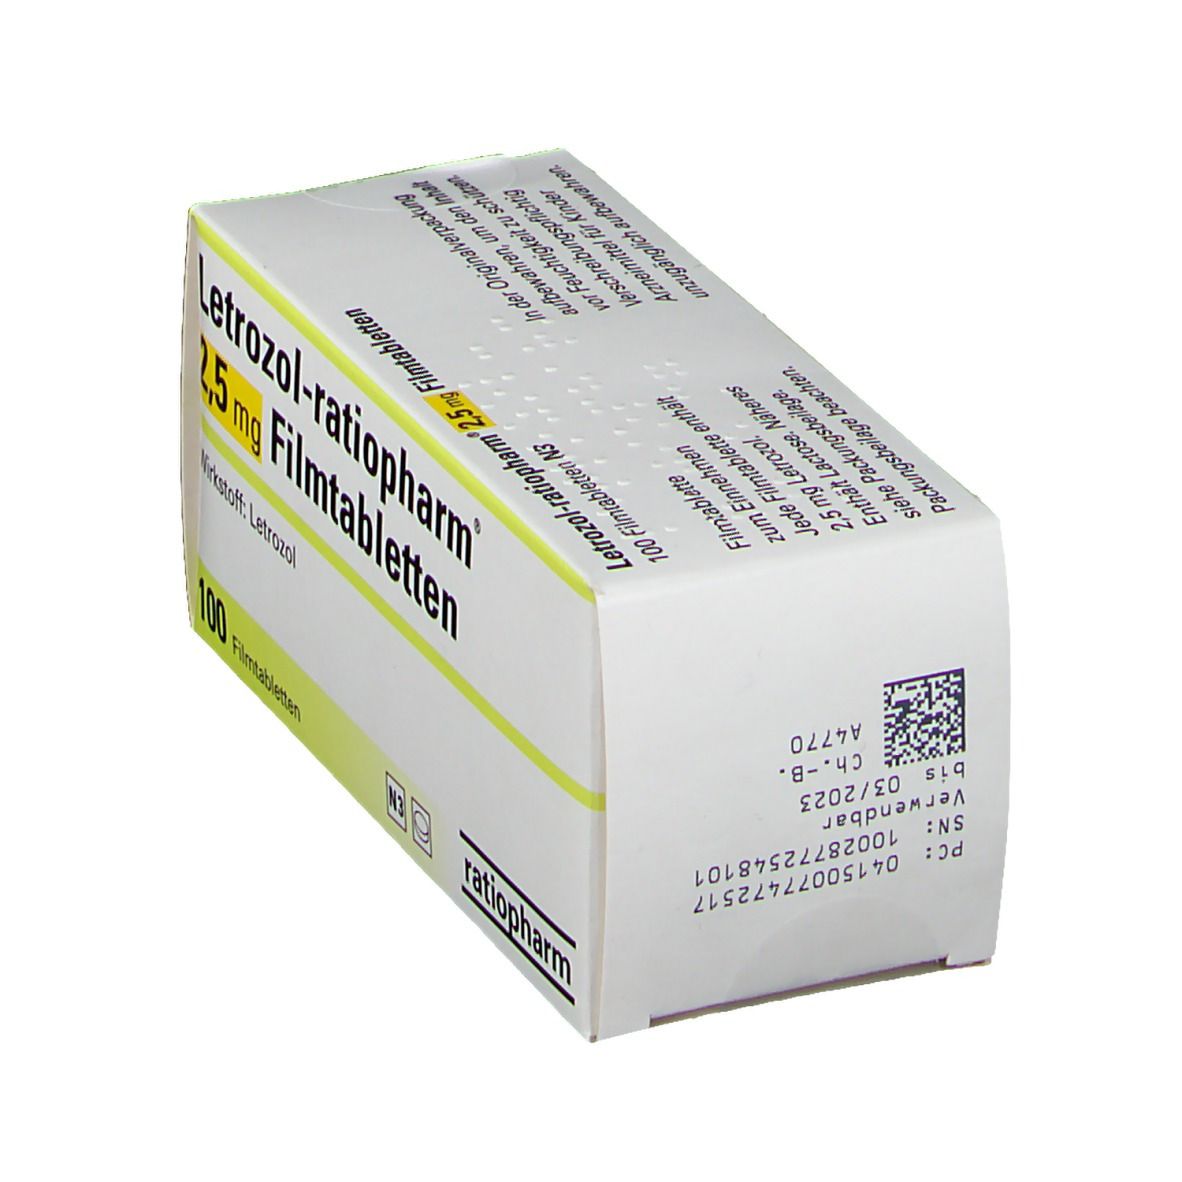 Letrozol-ratiopharm® 2,5 mg